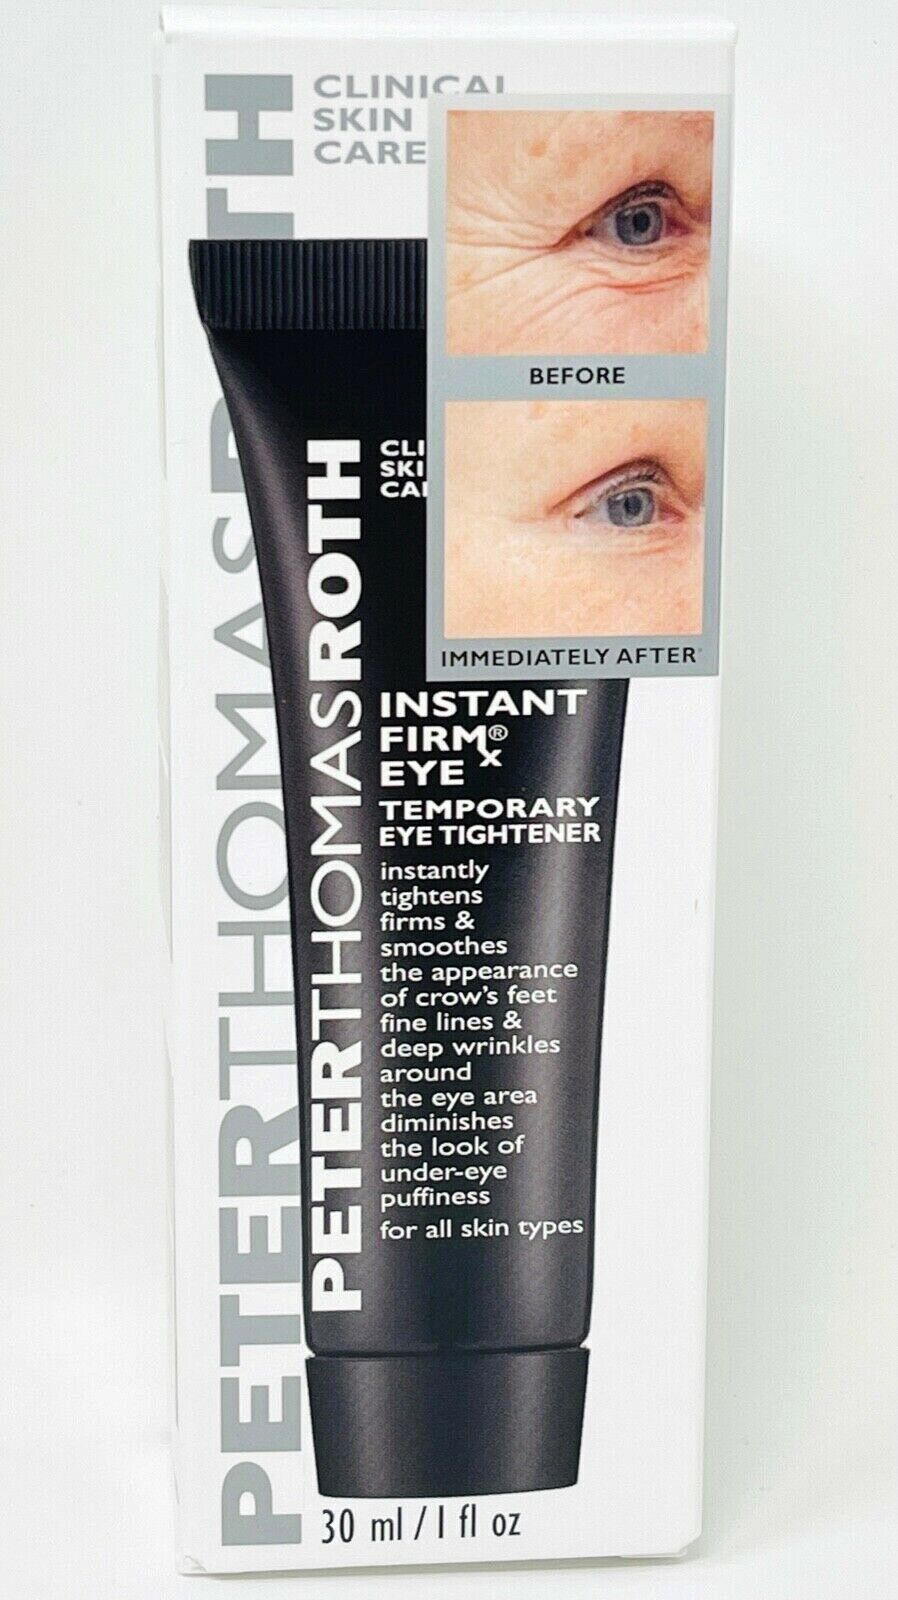 New Sealed Peter Thomas Roth Instant Firmx Eye Temporary Eye Tightener 1 Fl oz